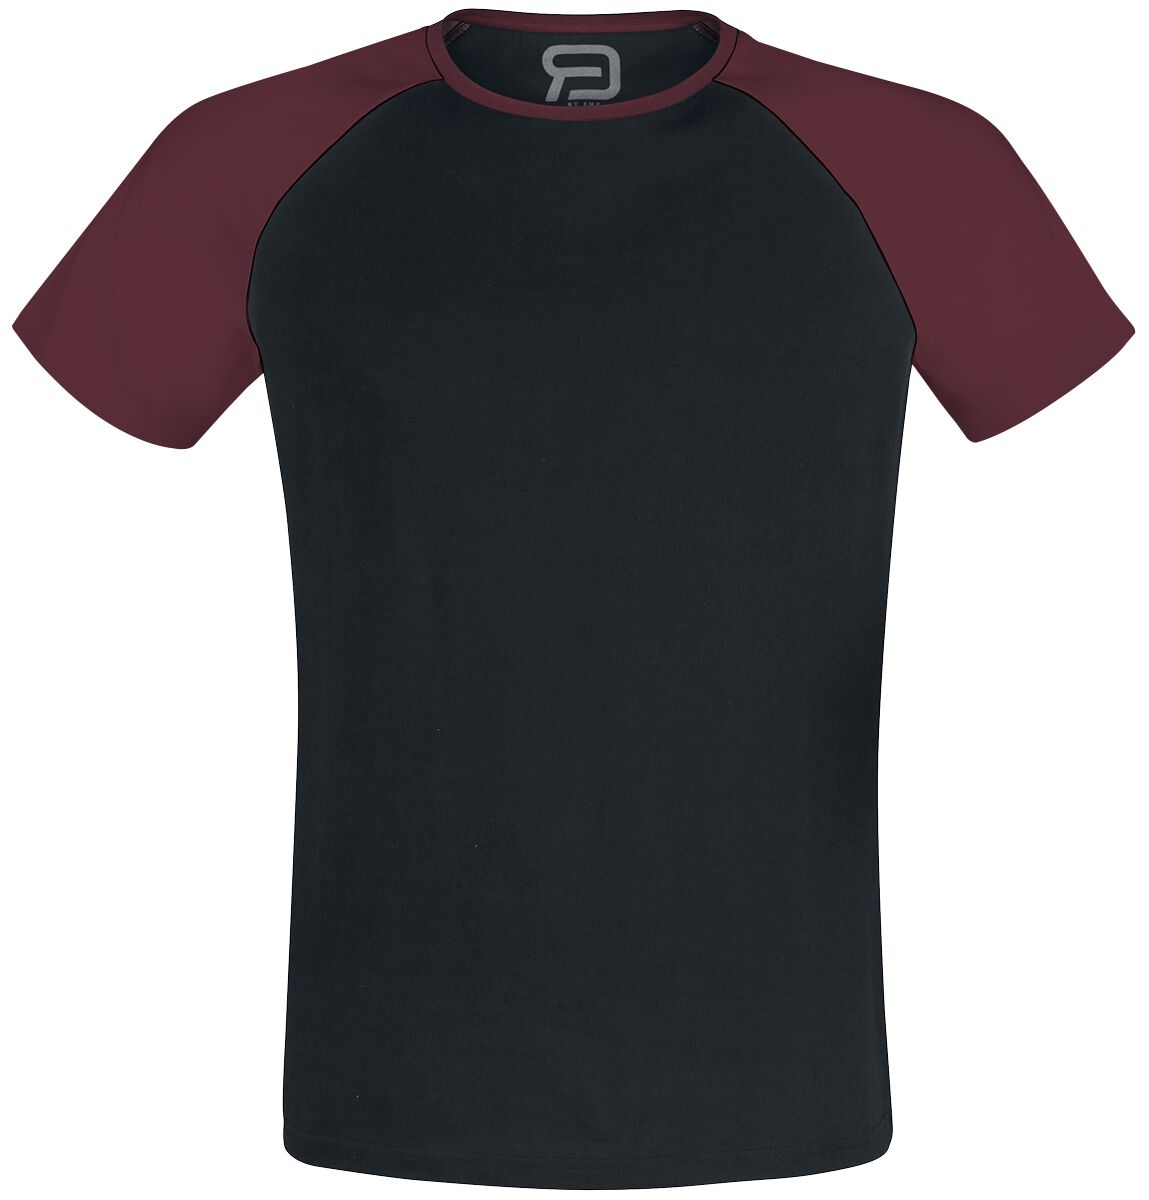 RED by EMP Short Raglan Road T-Shirt schwarz bordeaux in 3XL